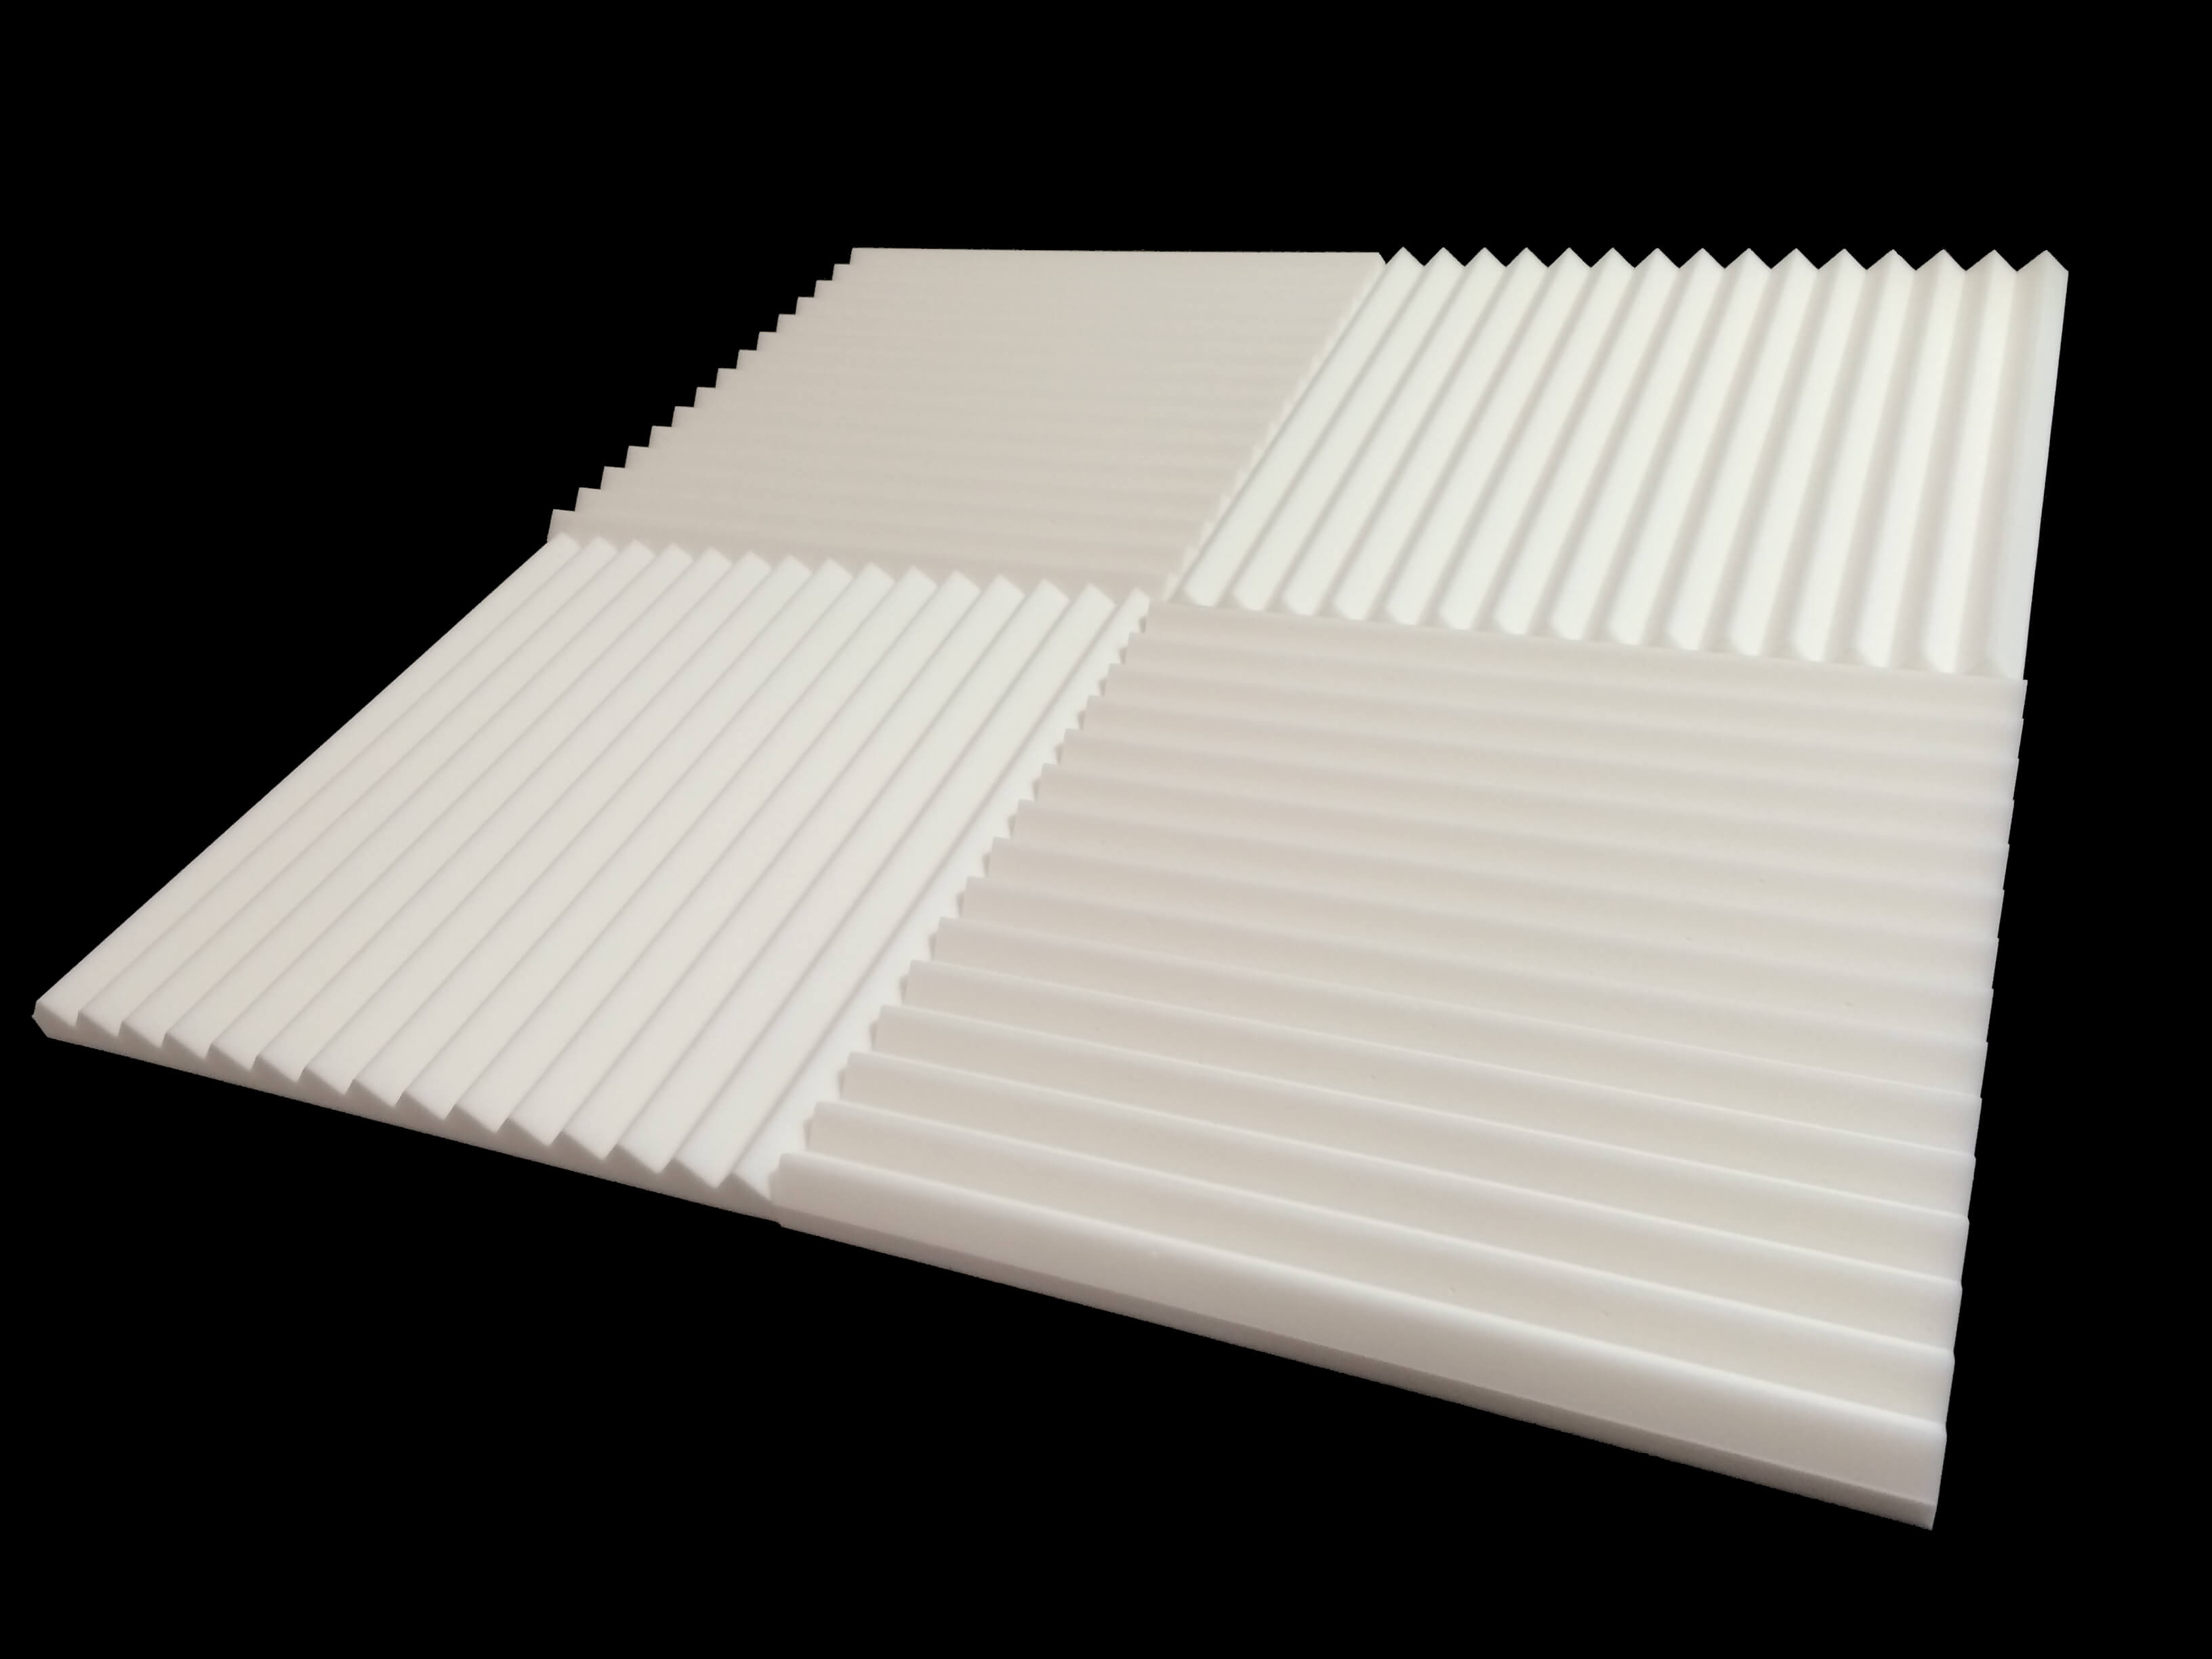 Limited Edition Mel-Acoustic Wedge 40mm White Melamine Acoustic Foam Panel 520x520